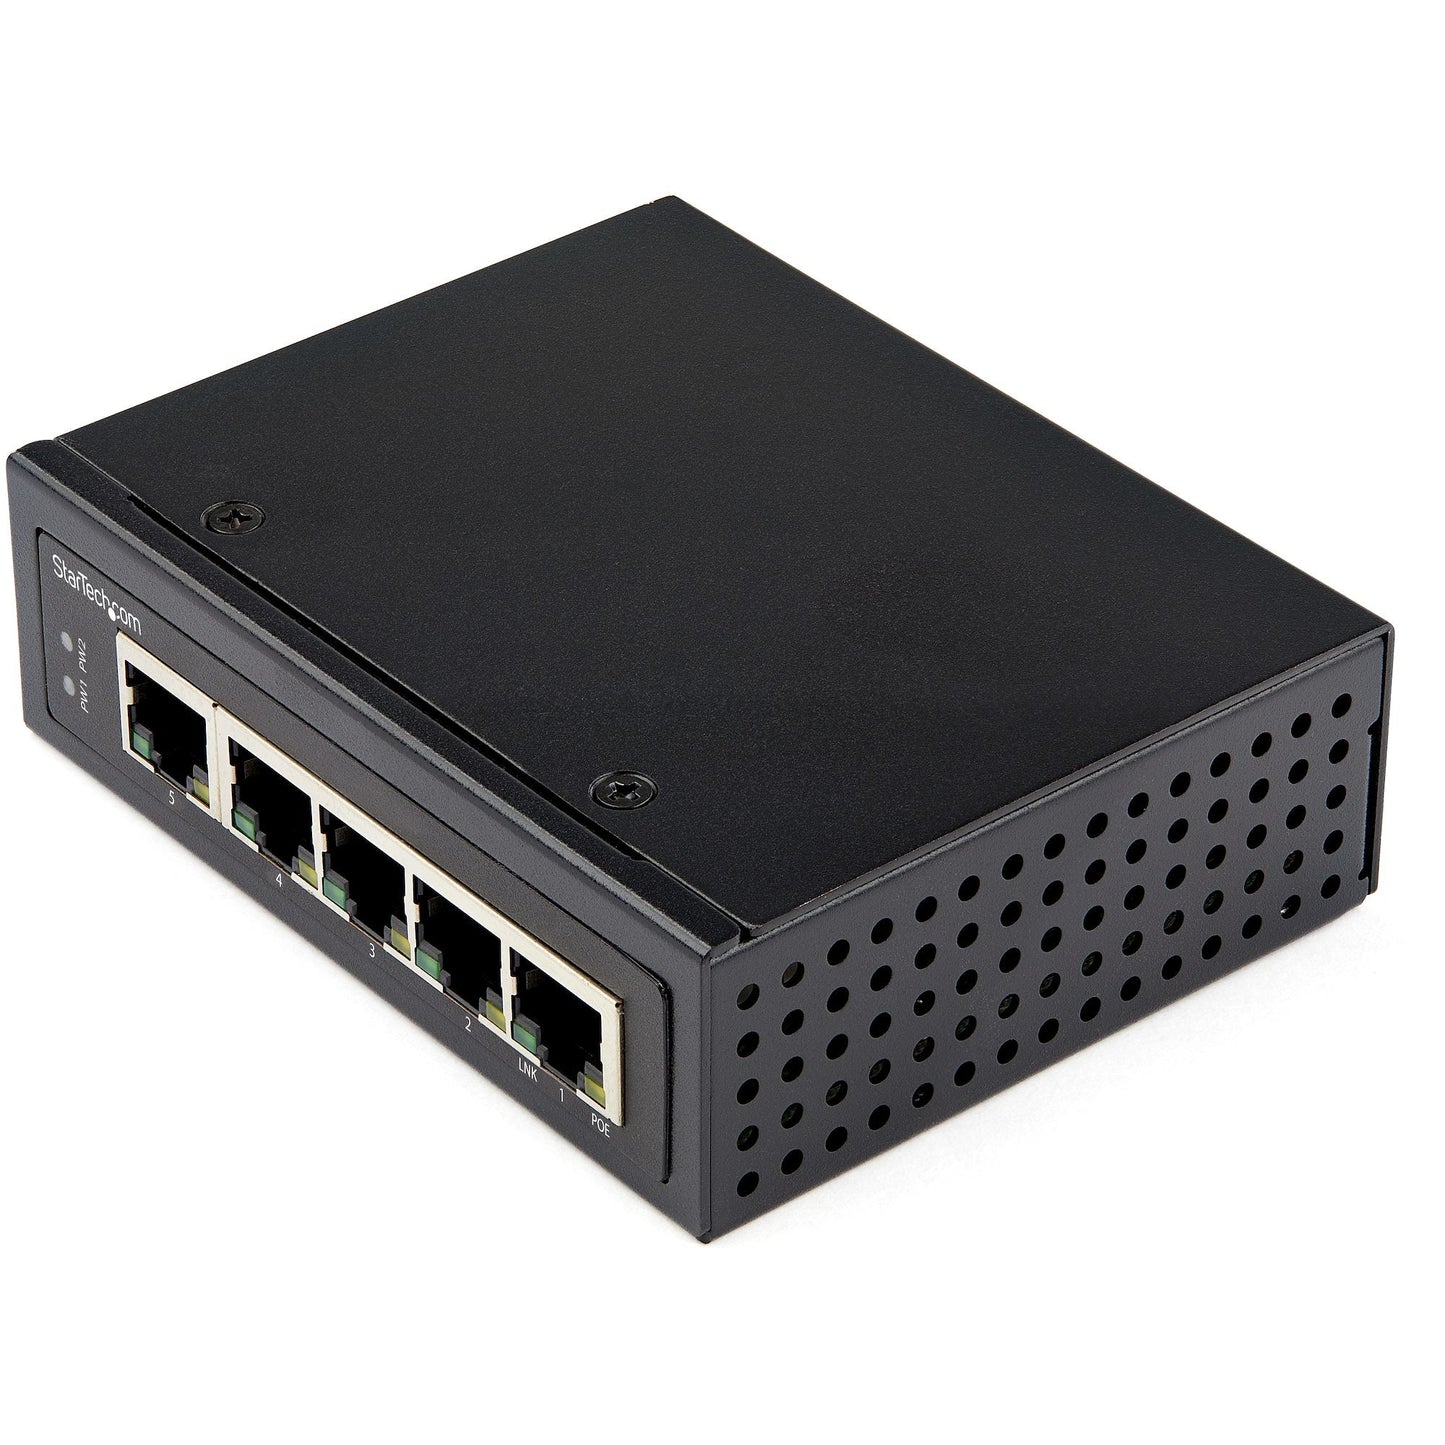 Startech.Com Industrial 5 Port Gigabit Poe Switch - 30W - Power Over Ethernet Switch - Hardened